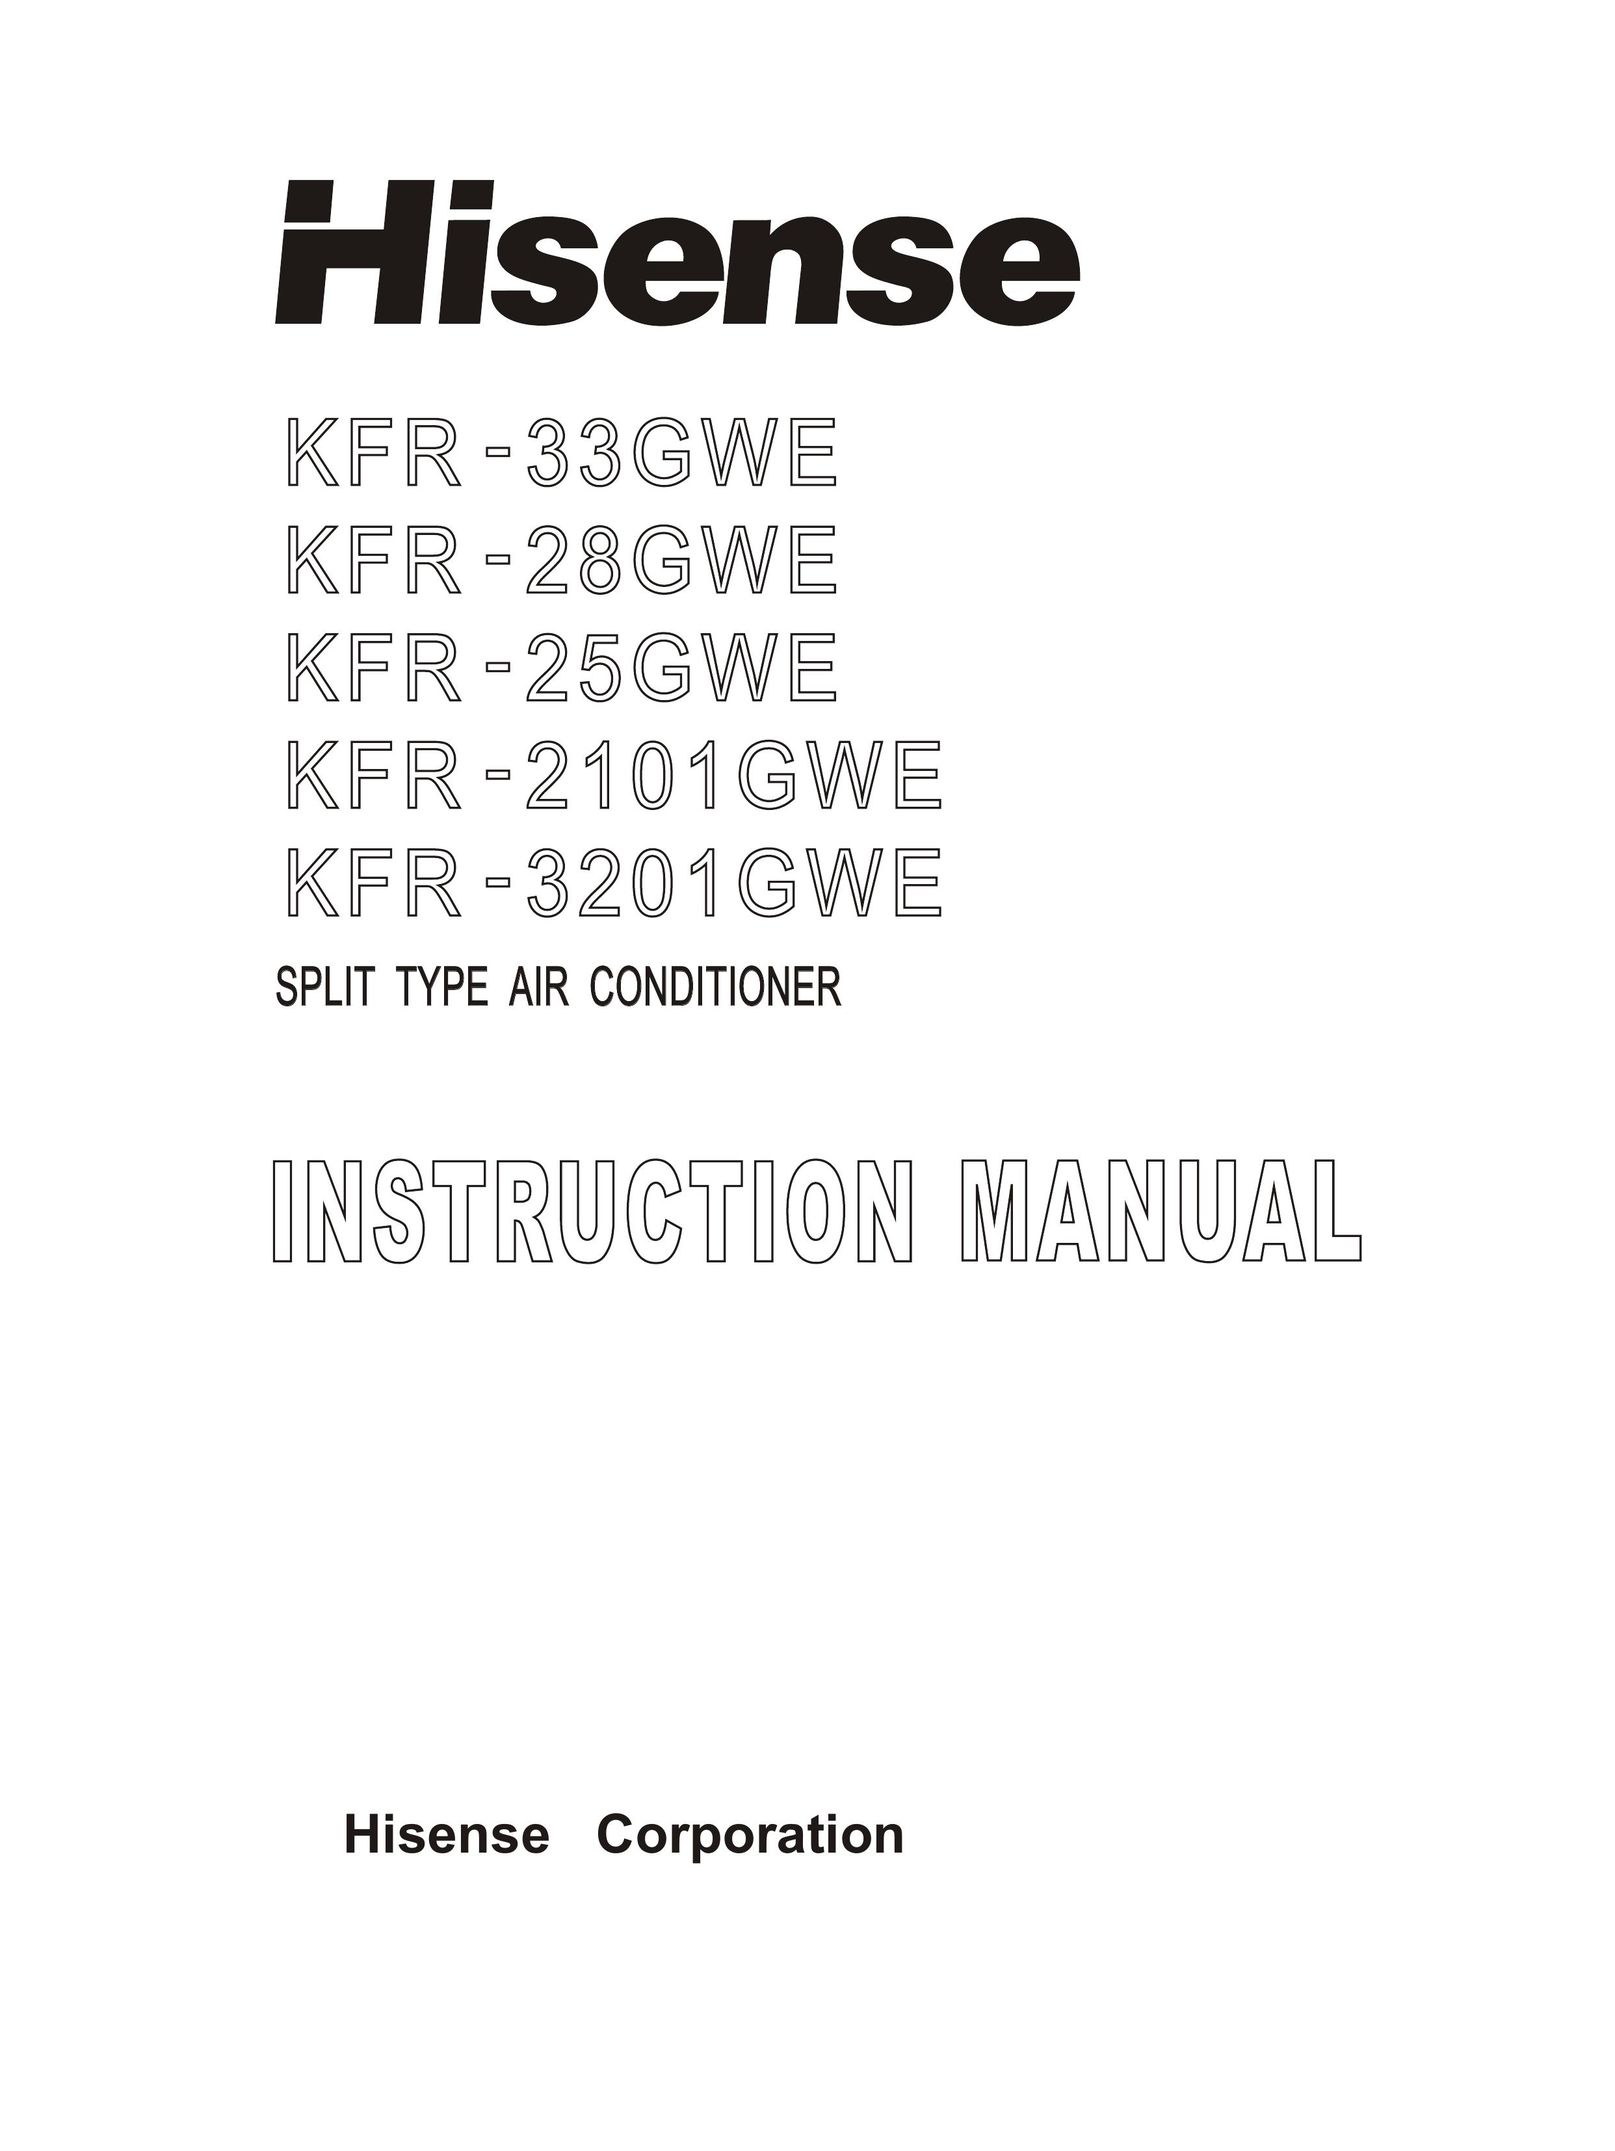 Hisense Group KFR 25GWE Air Conditioner User Manual